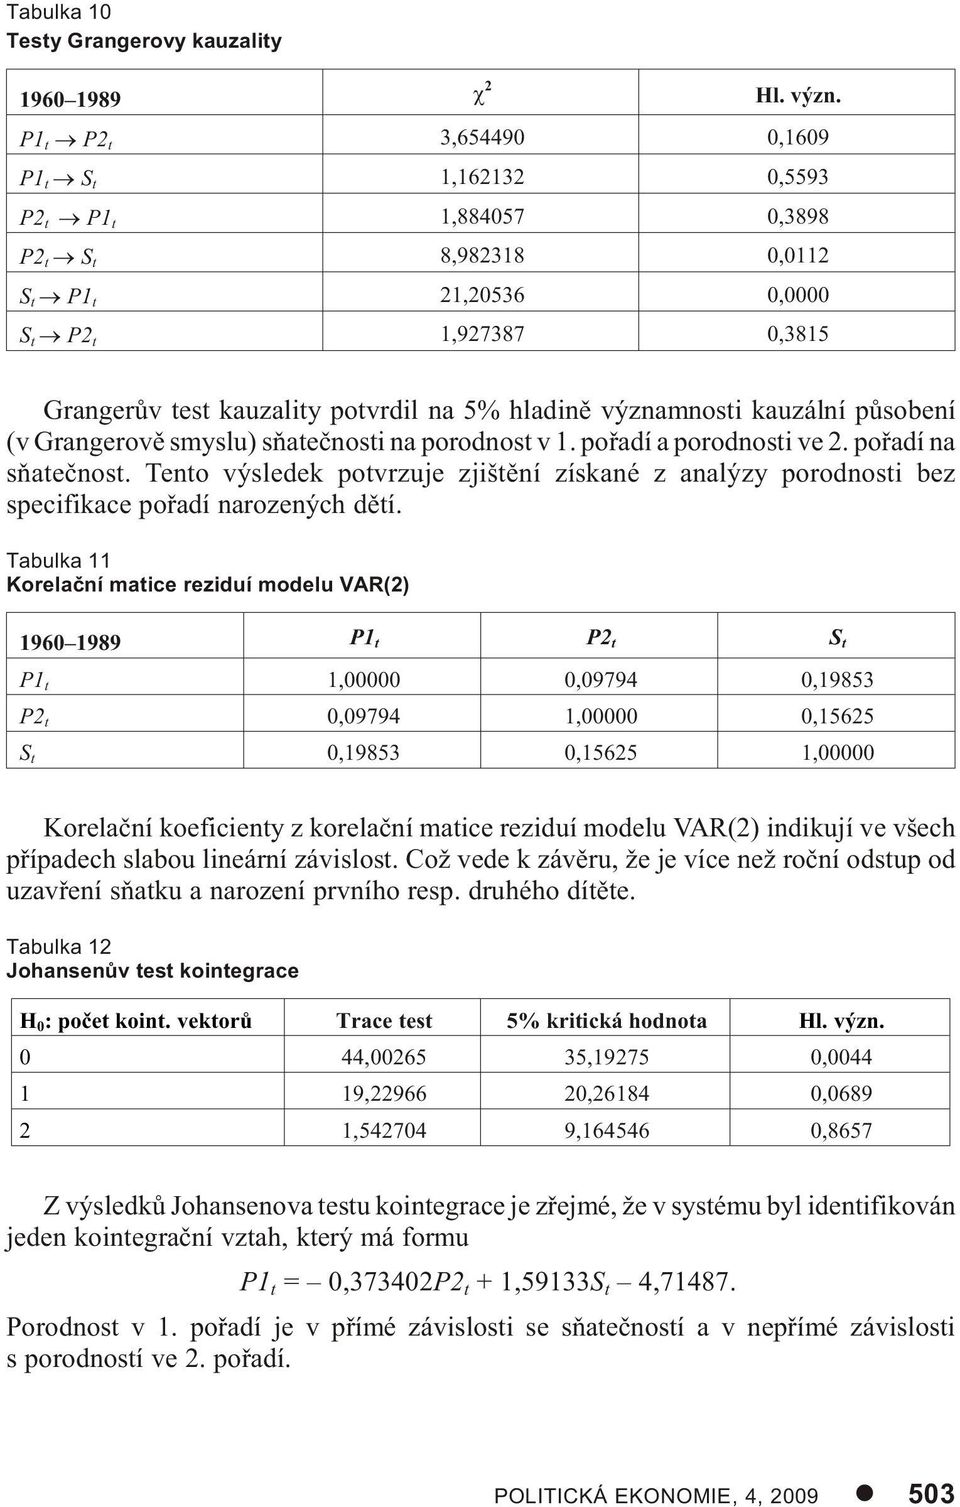 významnosti kauzální pùsobení (v Grangerovì smyslu) sòateènosti na porodnost v 1. poøadí a porodnosti ve 2. poøadí na sòateènost.